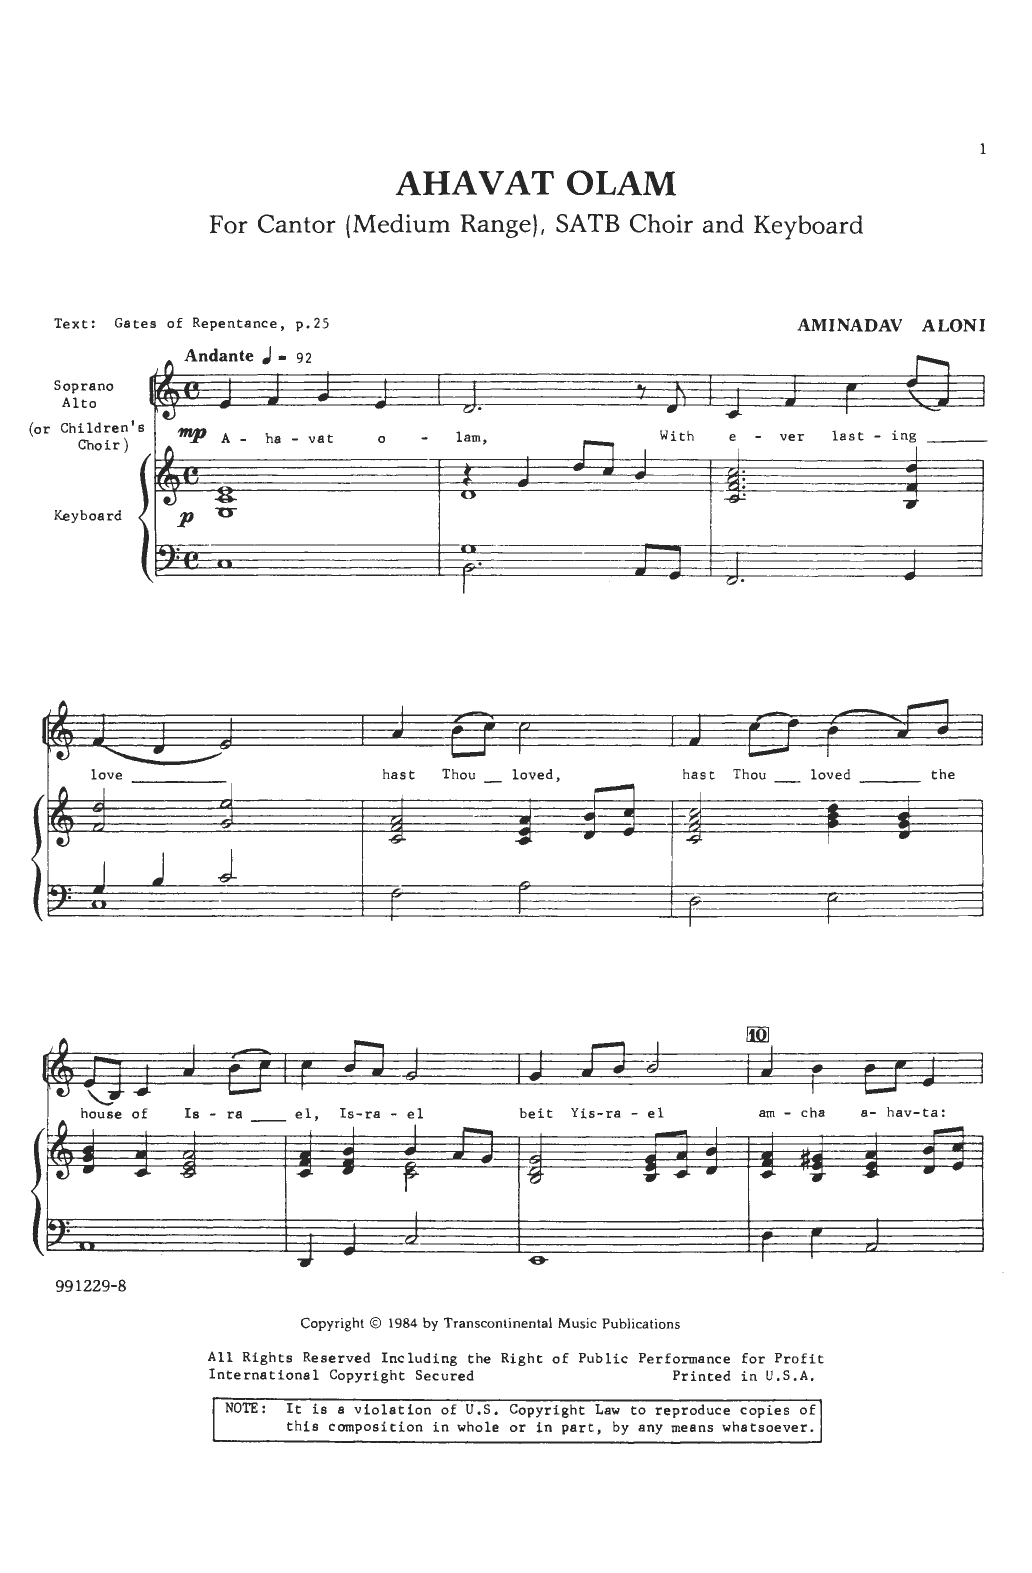 Aminadav Aloni Ahavat Olam Sheet Music Notes & Chords for SATB Choir - Download or Print PDF